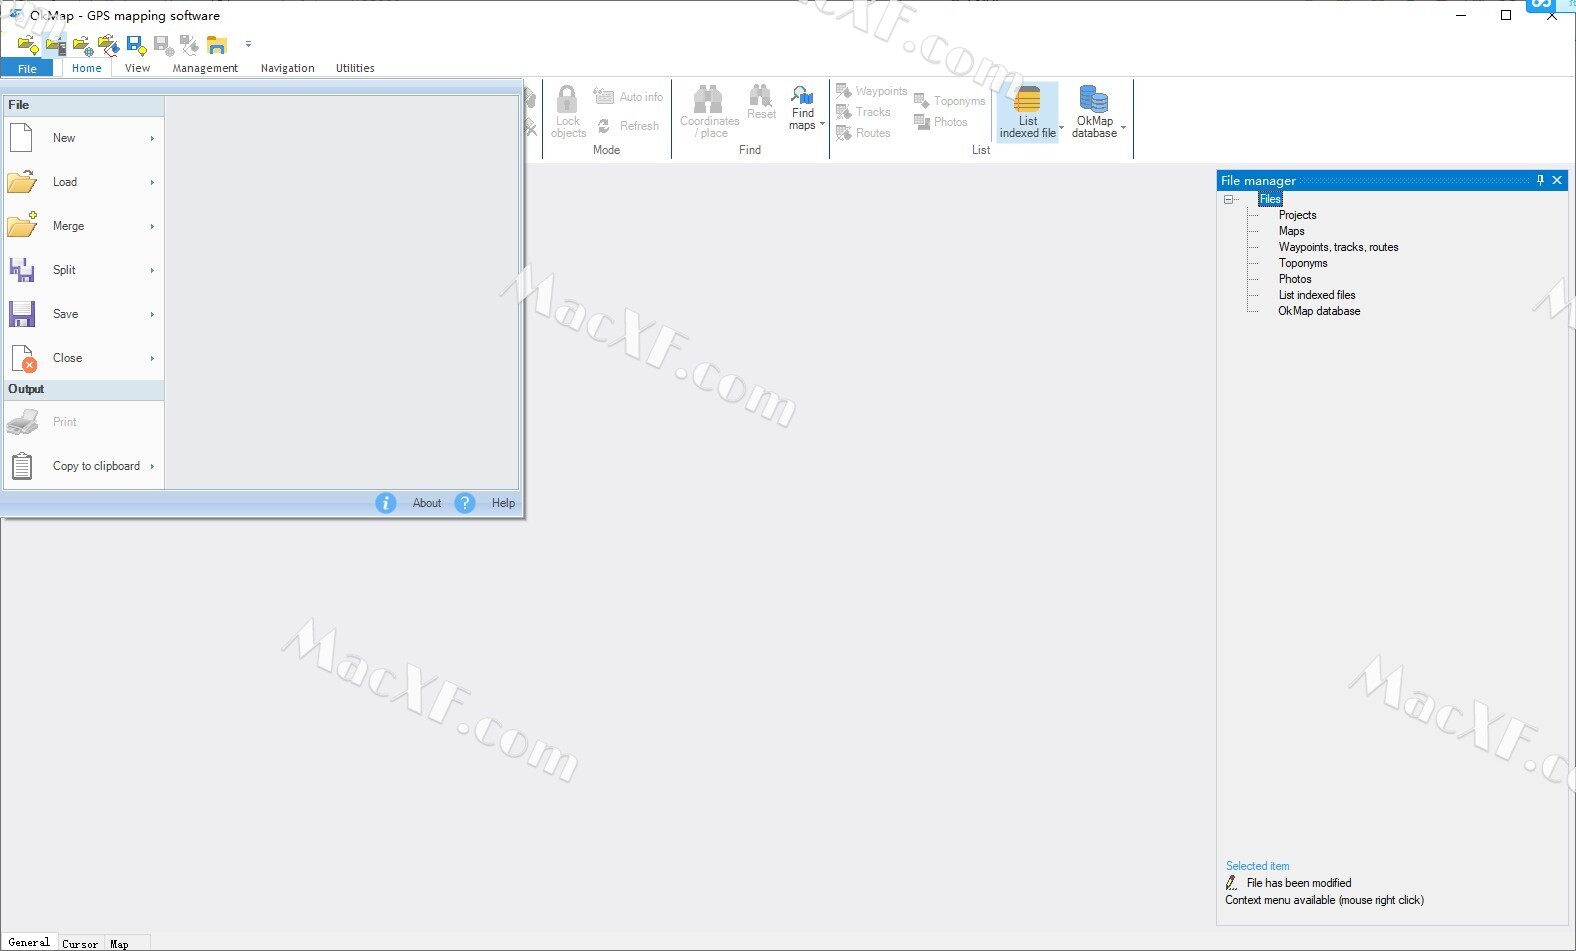 OkMap Desktop 17.10.6 download the new version